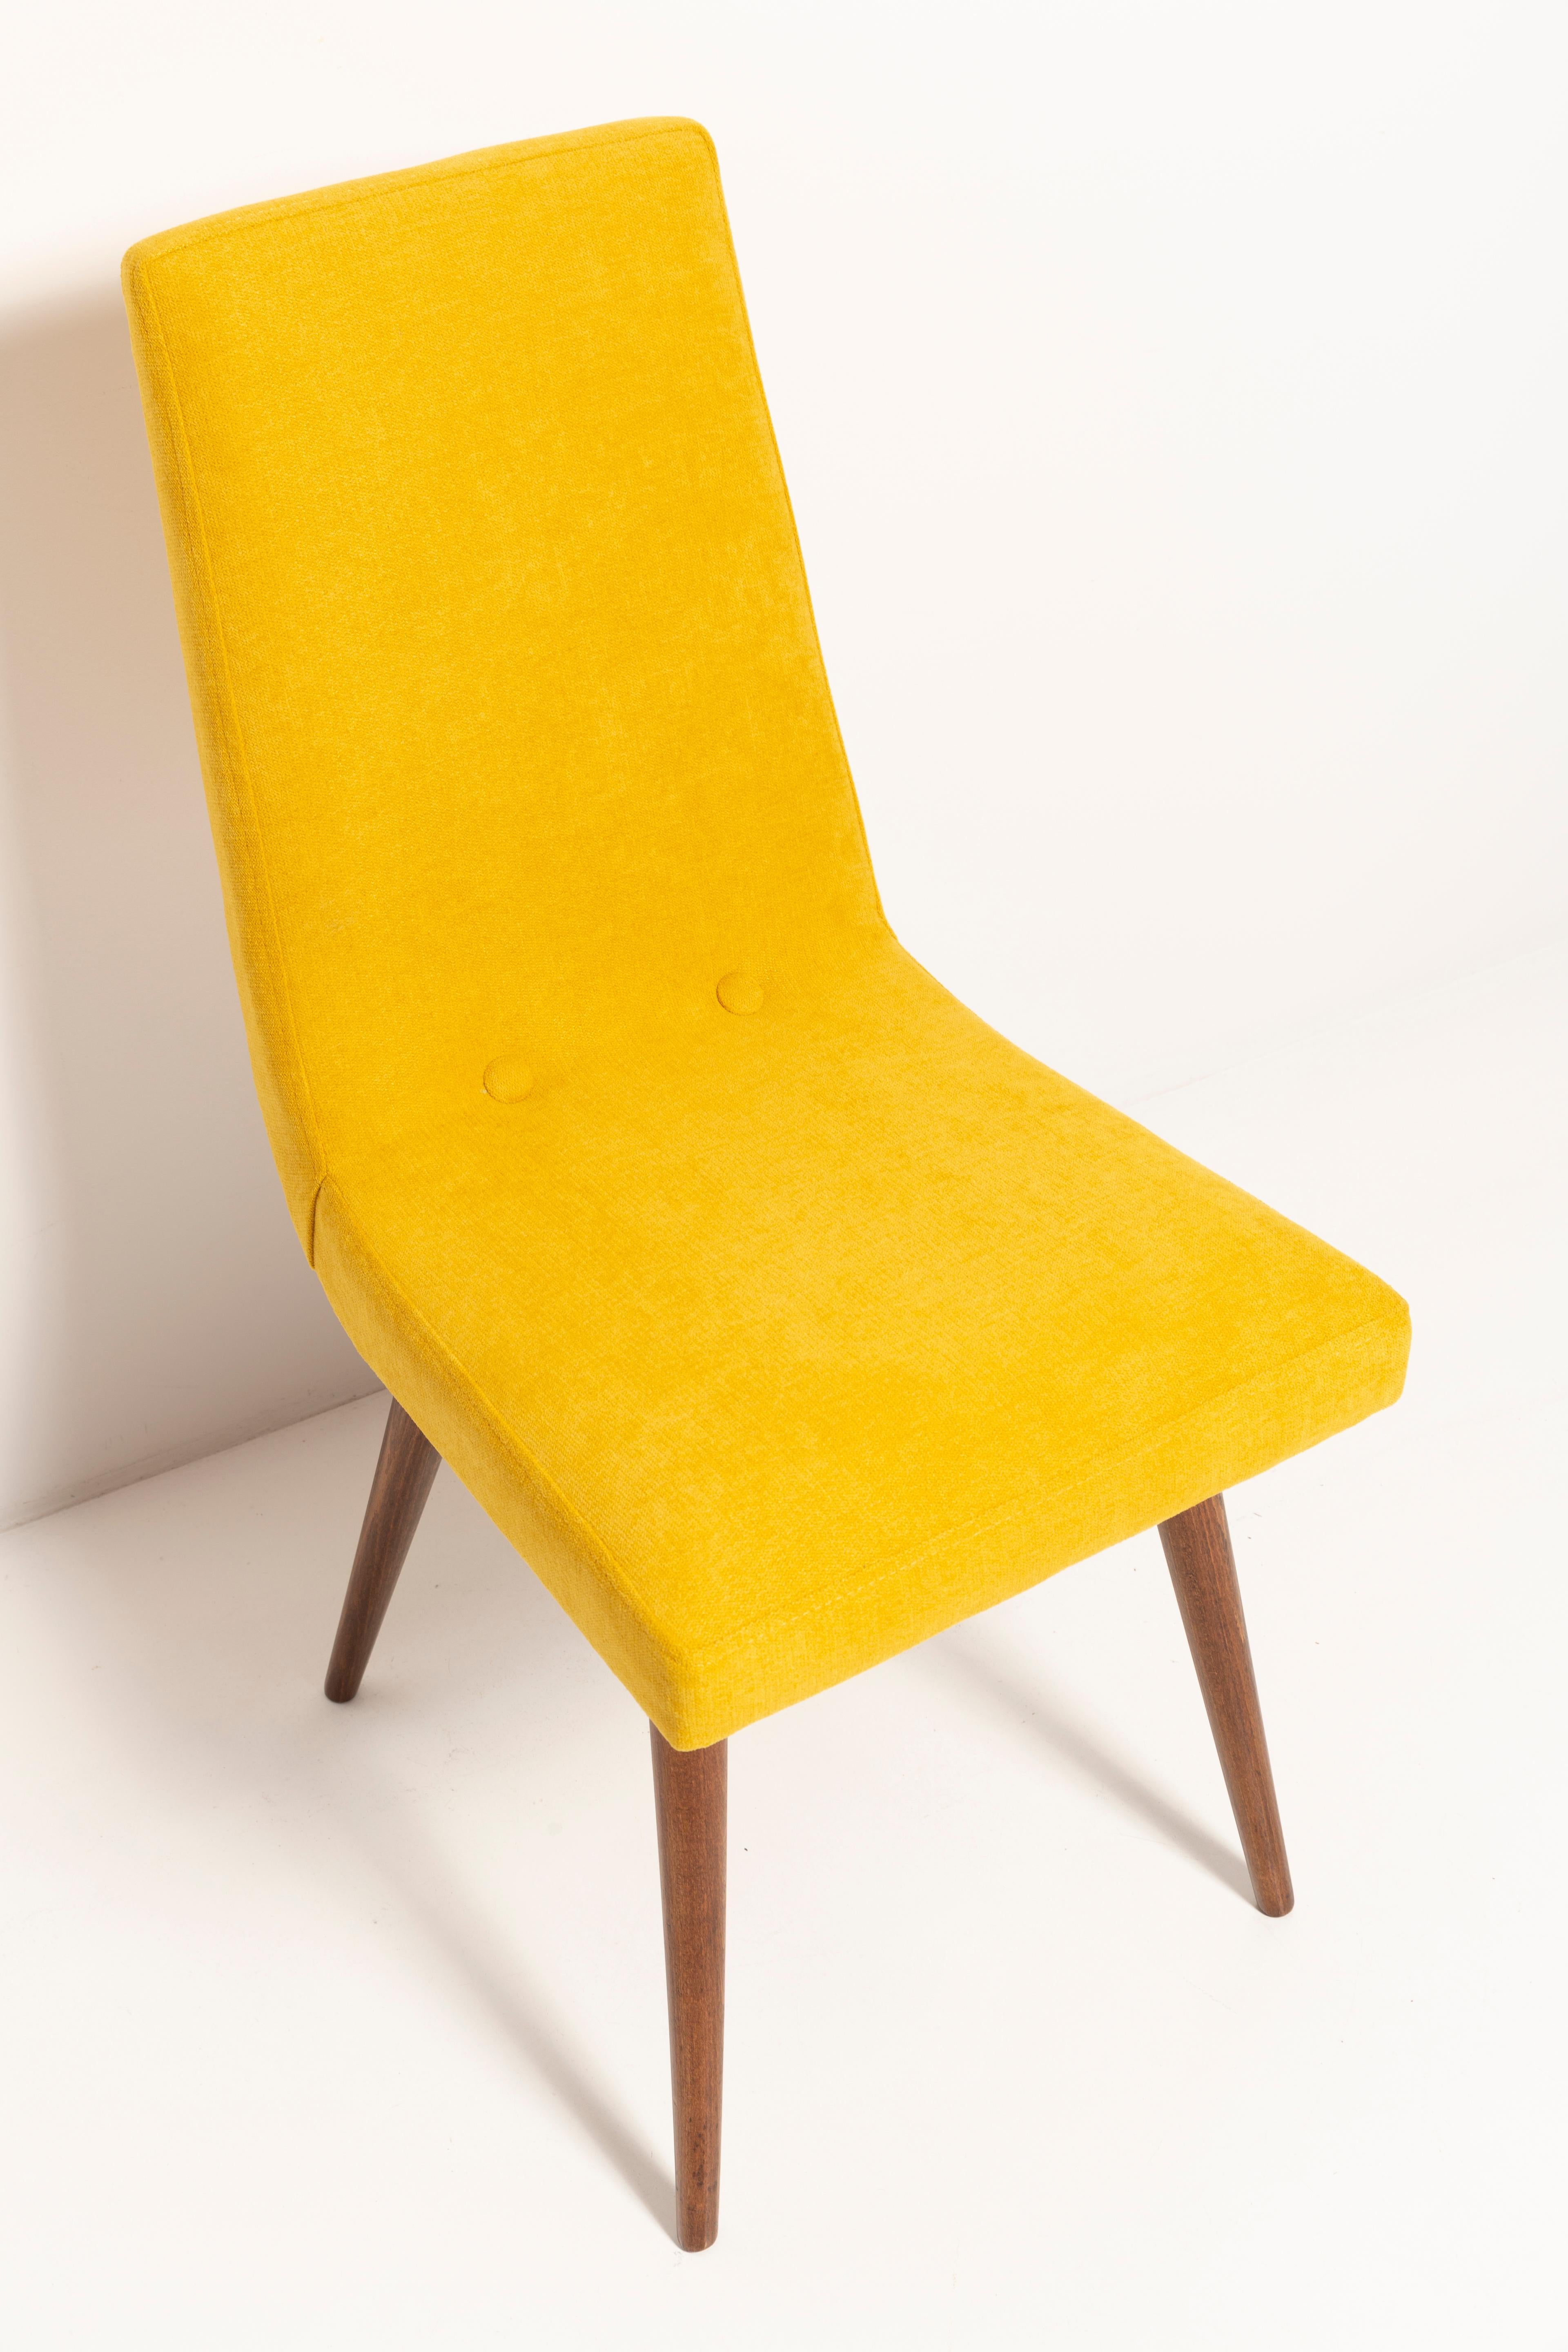 Set of Eight 20th Century Mustard Yellow Wool Chair, Rajmund Halas Europe, 1960s For Sale 4